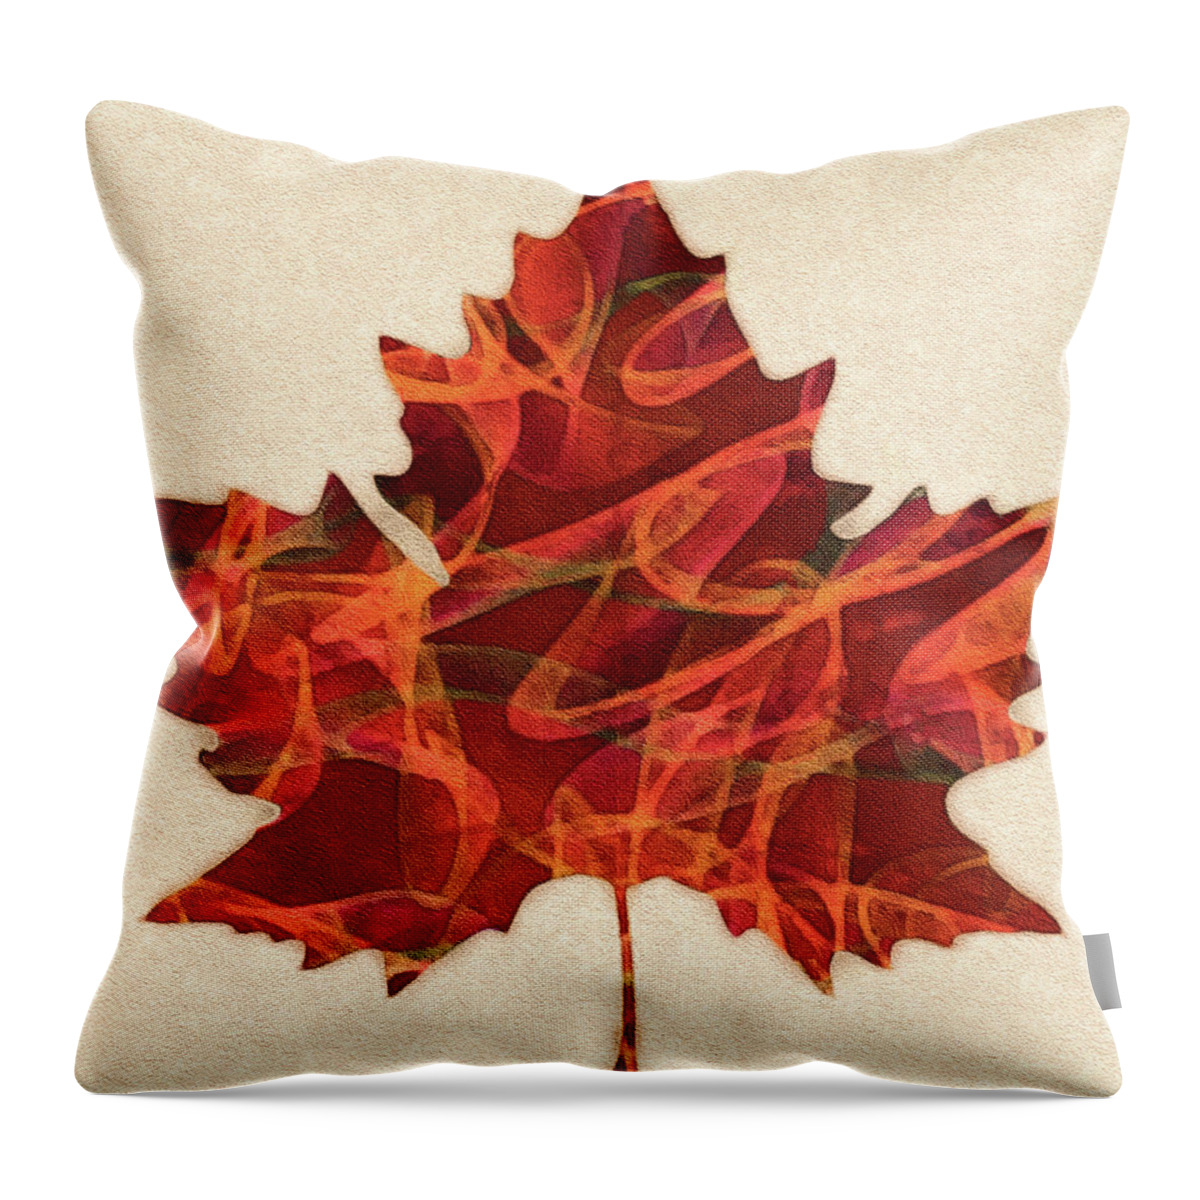 Surrealist Maple Tree Leaf Throw Pillow featuring the digital art Sugar Maple by Susan Maxwell Schmidt